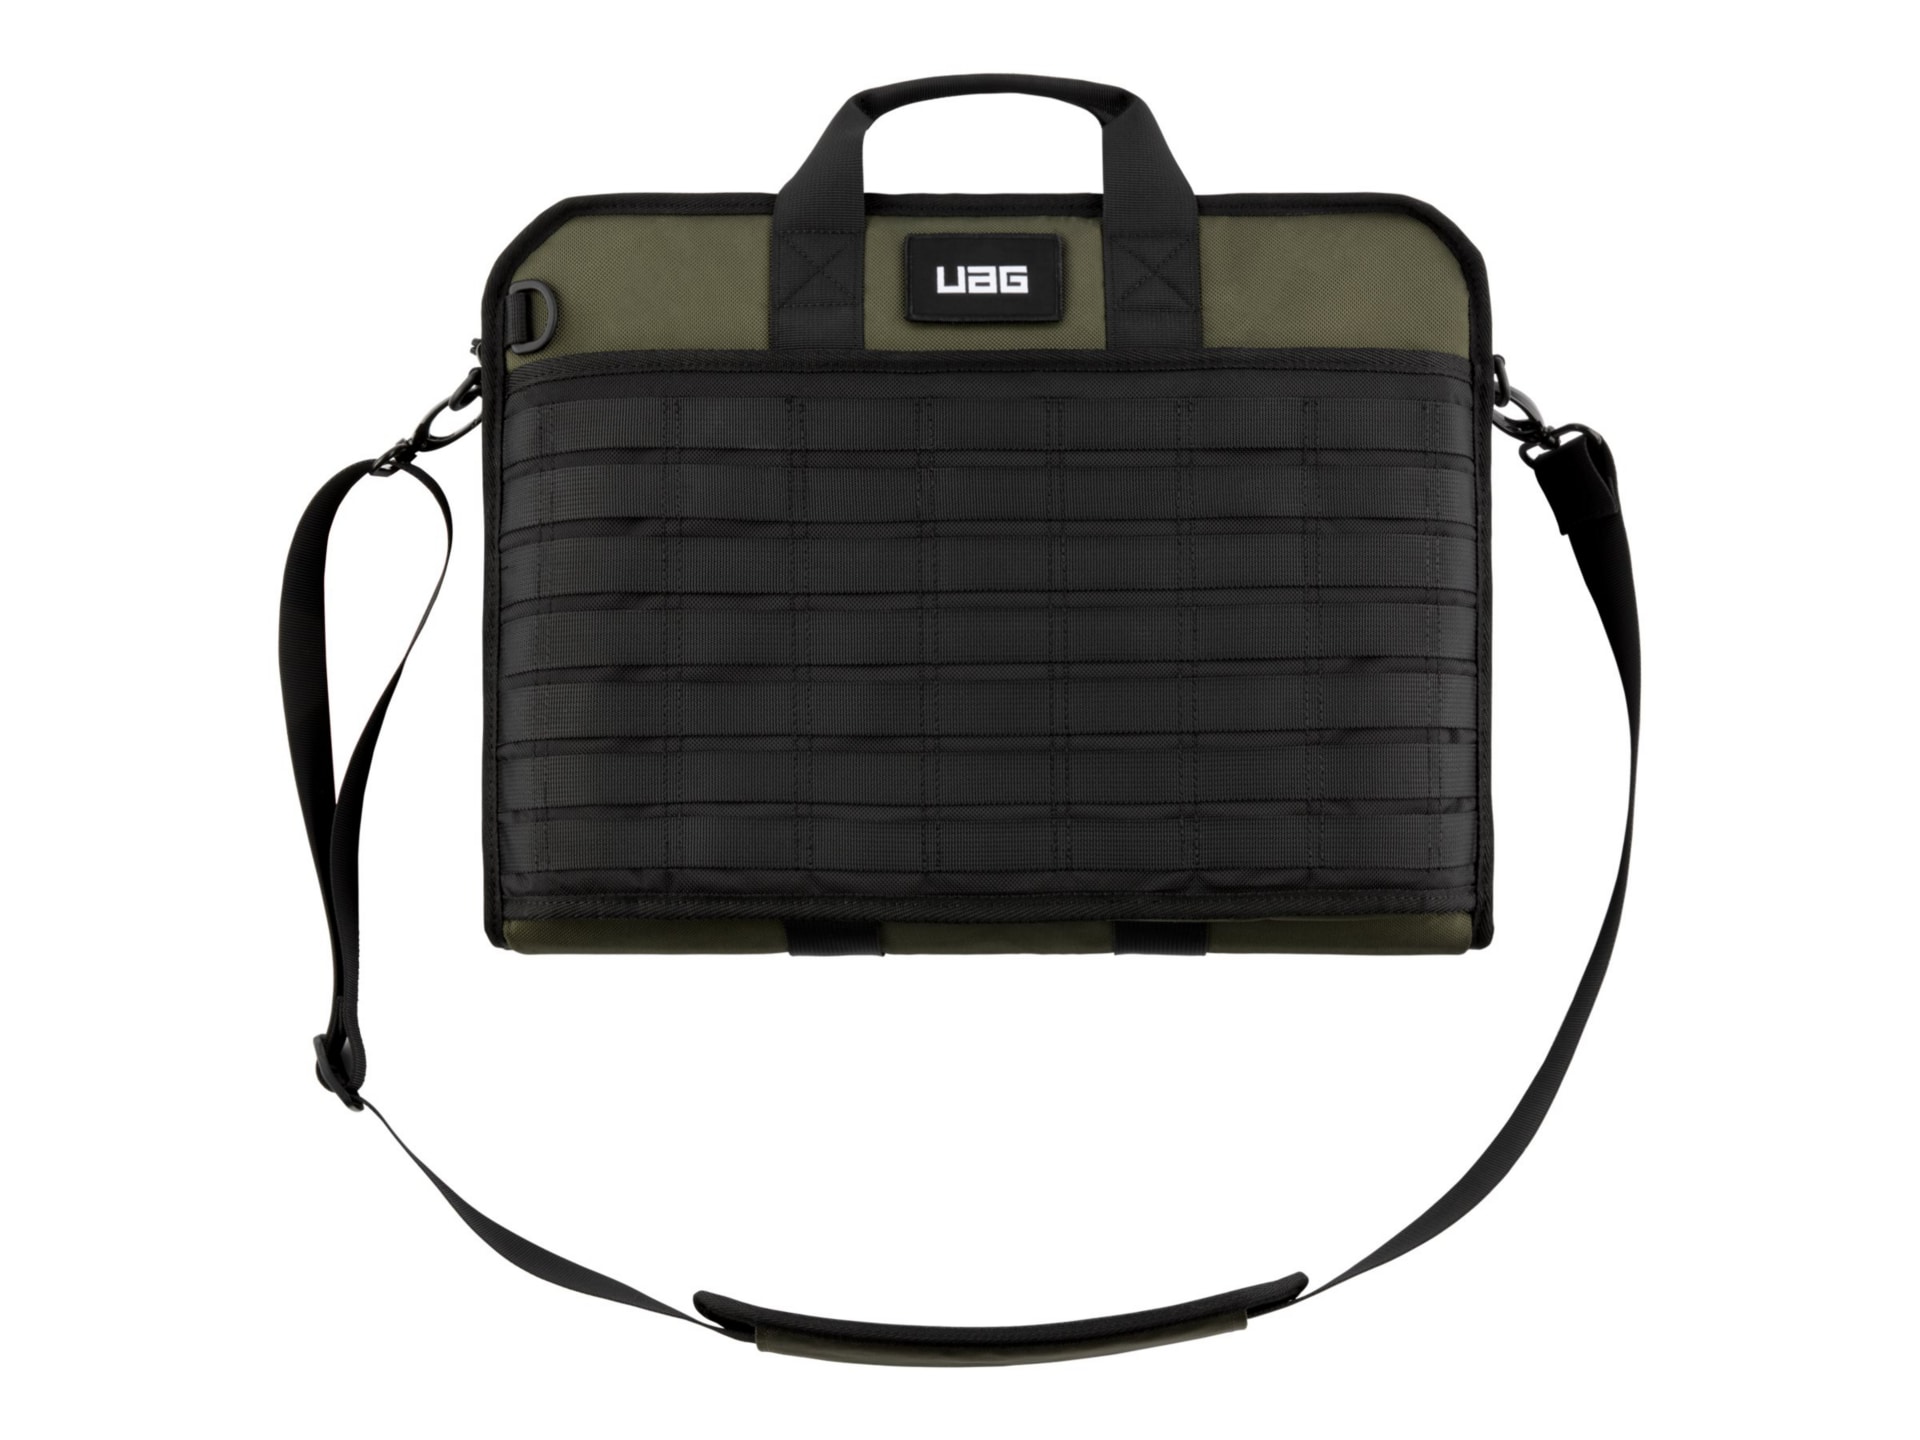 UAG Rugged Brief Bag Fits up to 16" Laptops/Tablets - Olive